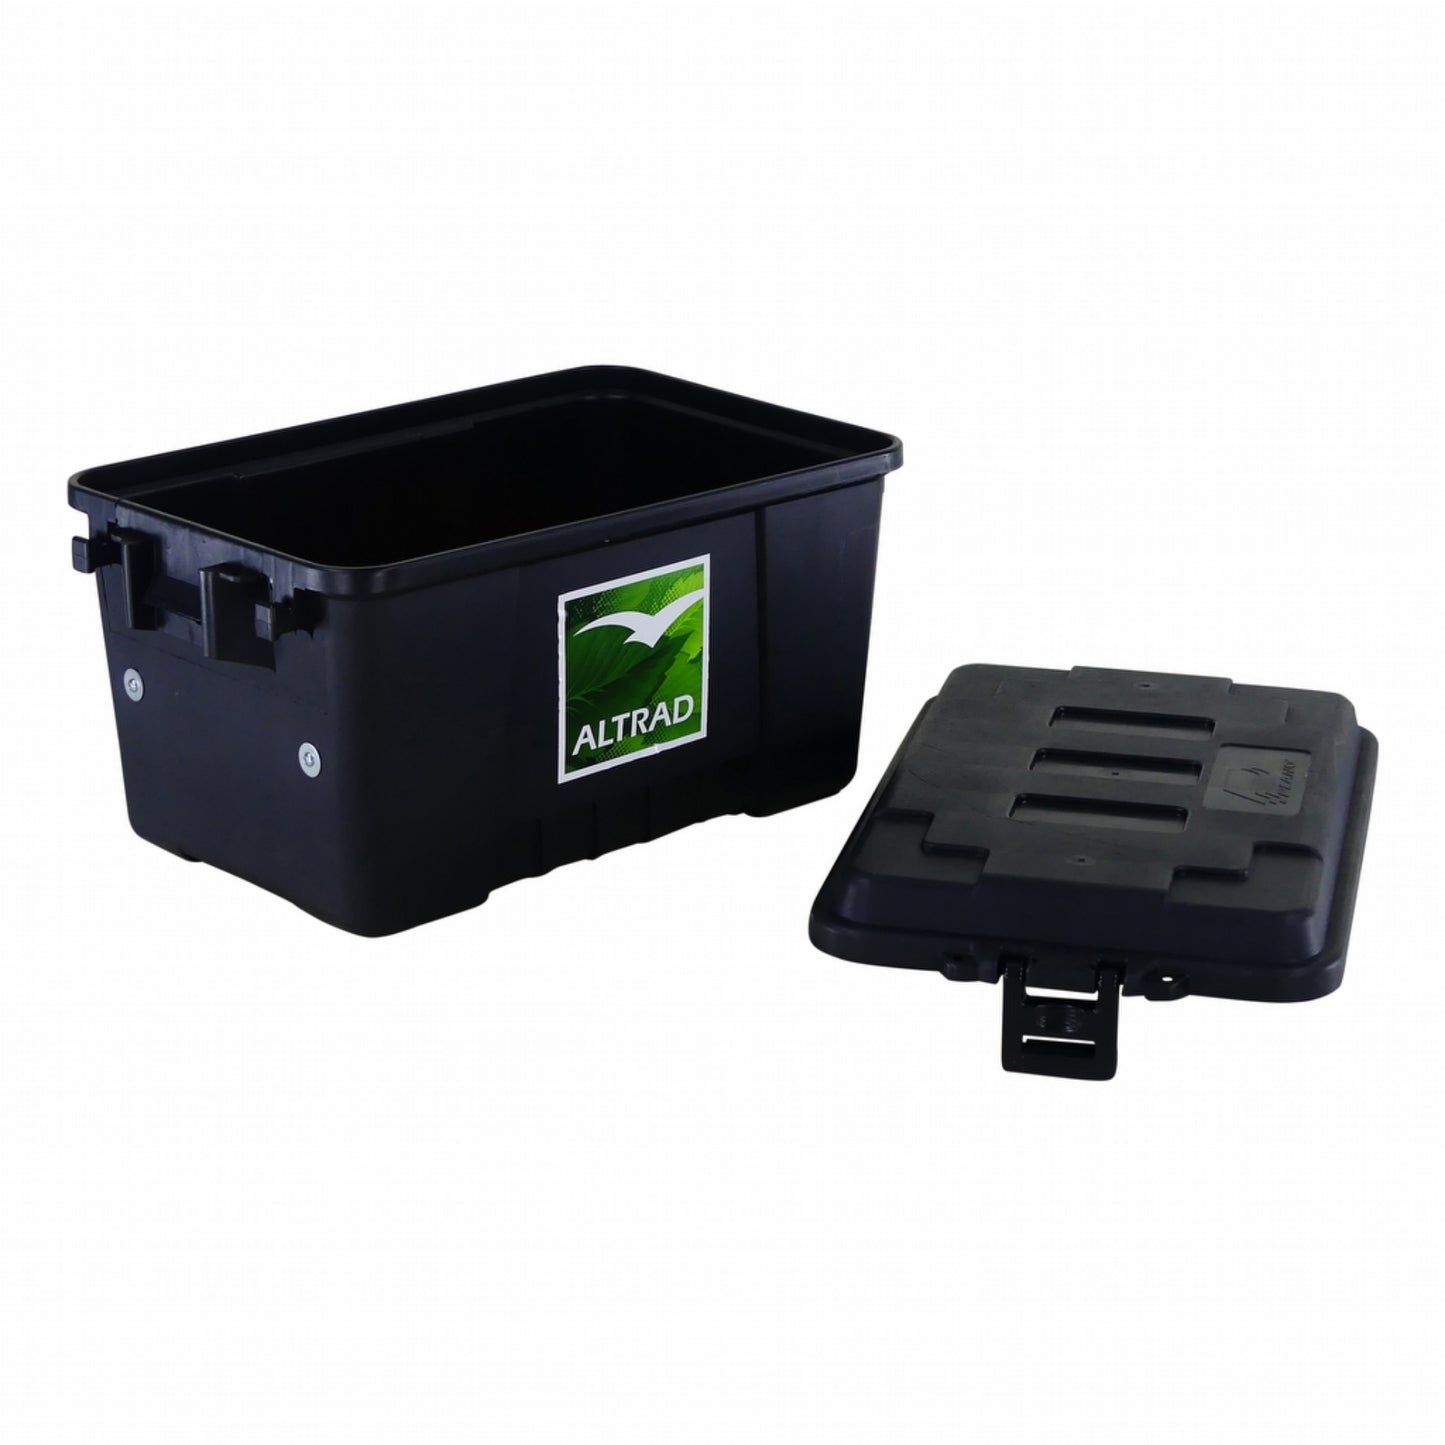 Altrad Belle eGX Battery Charger Storage Box